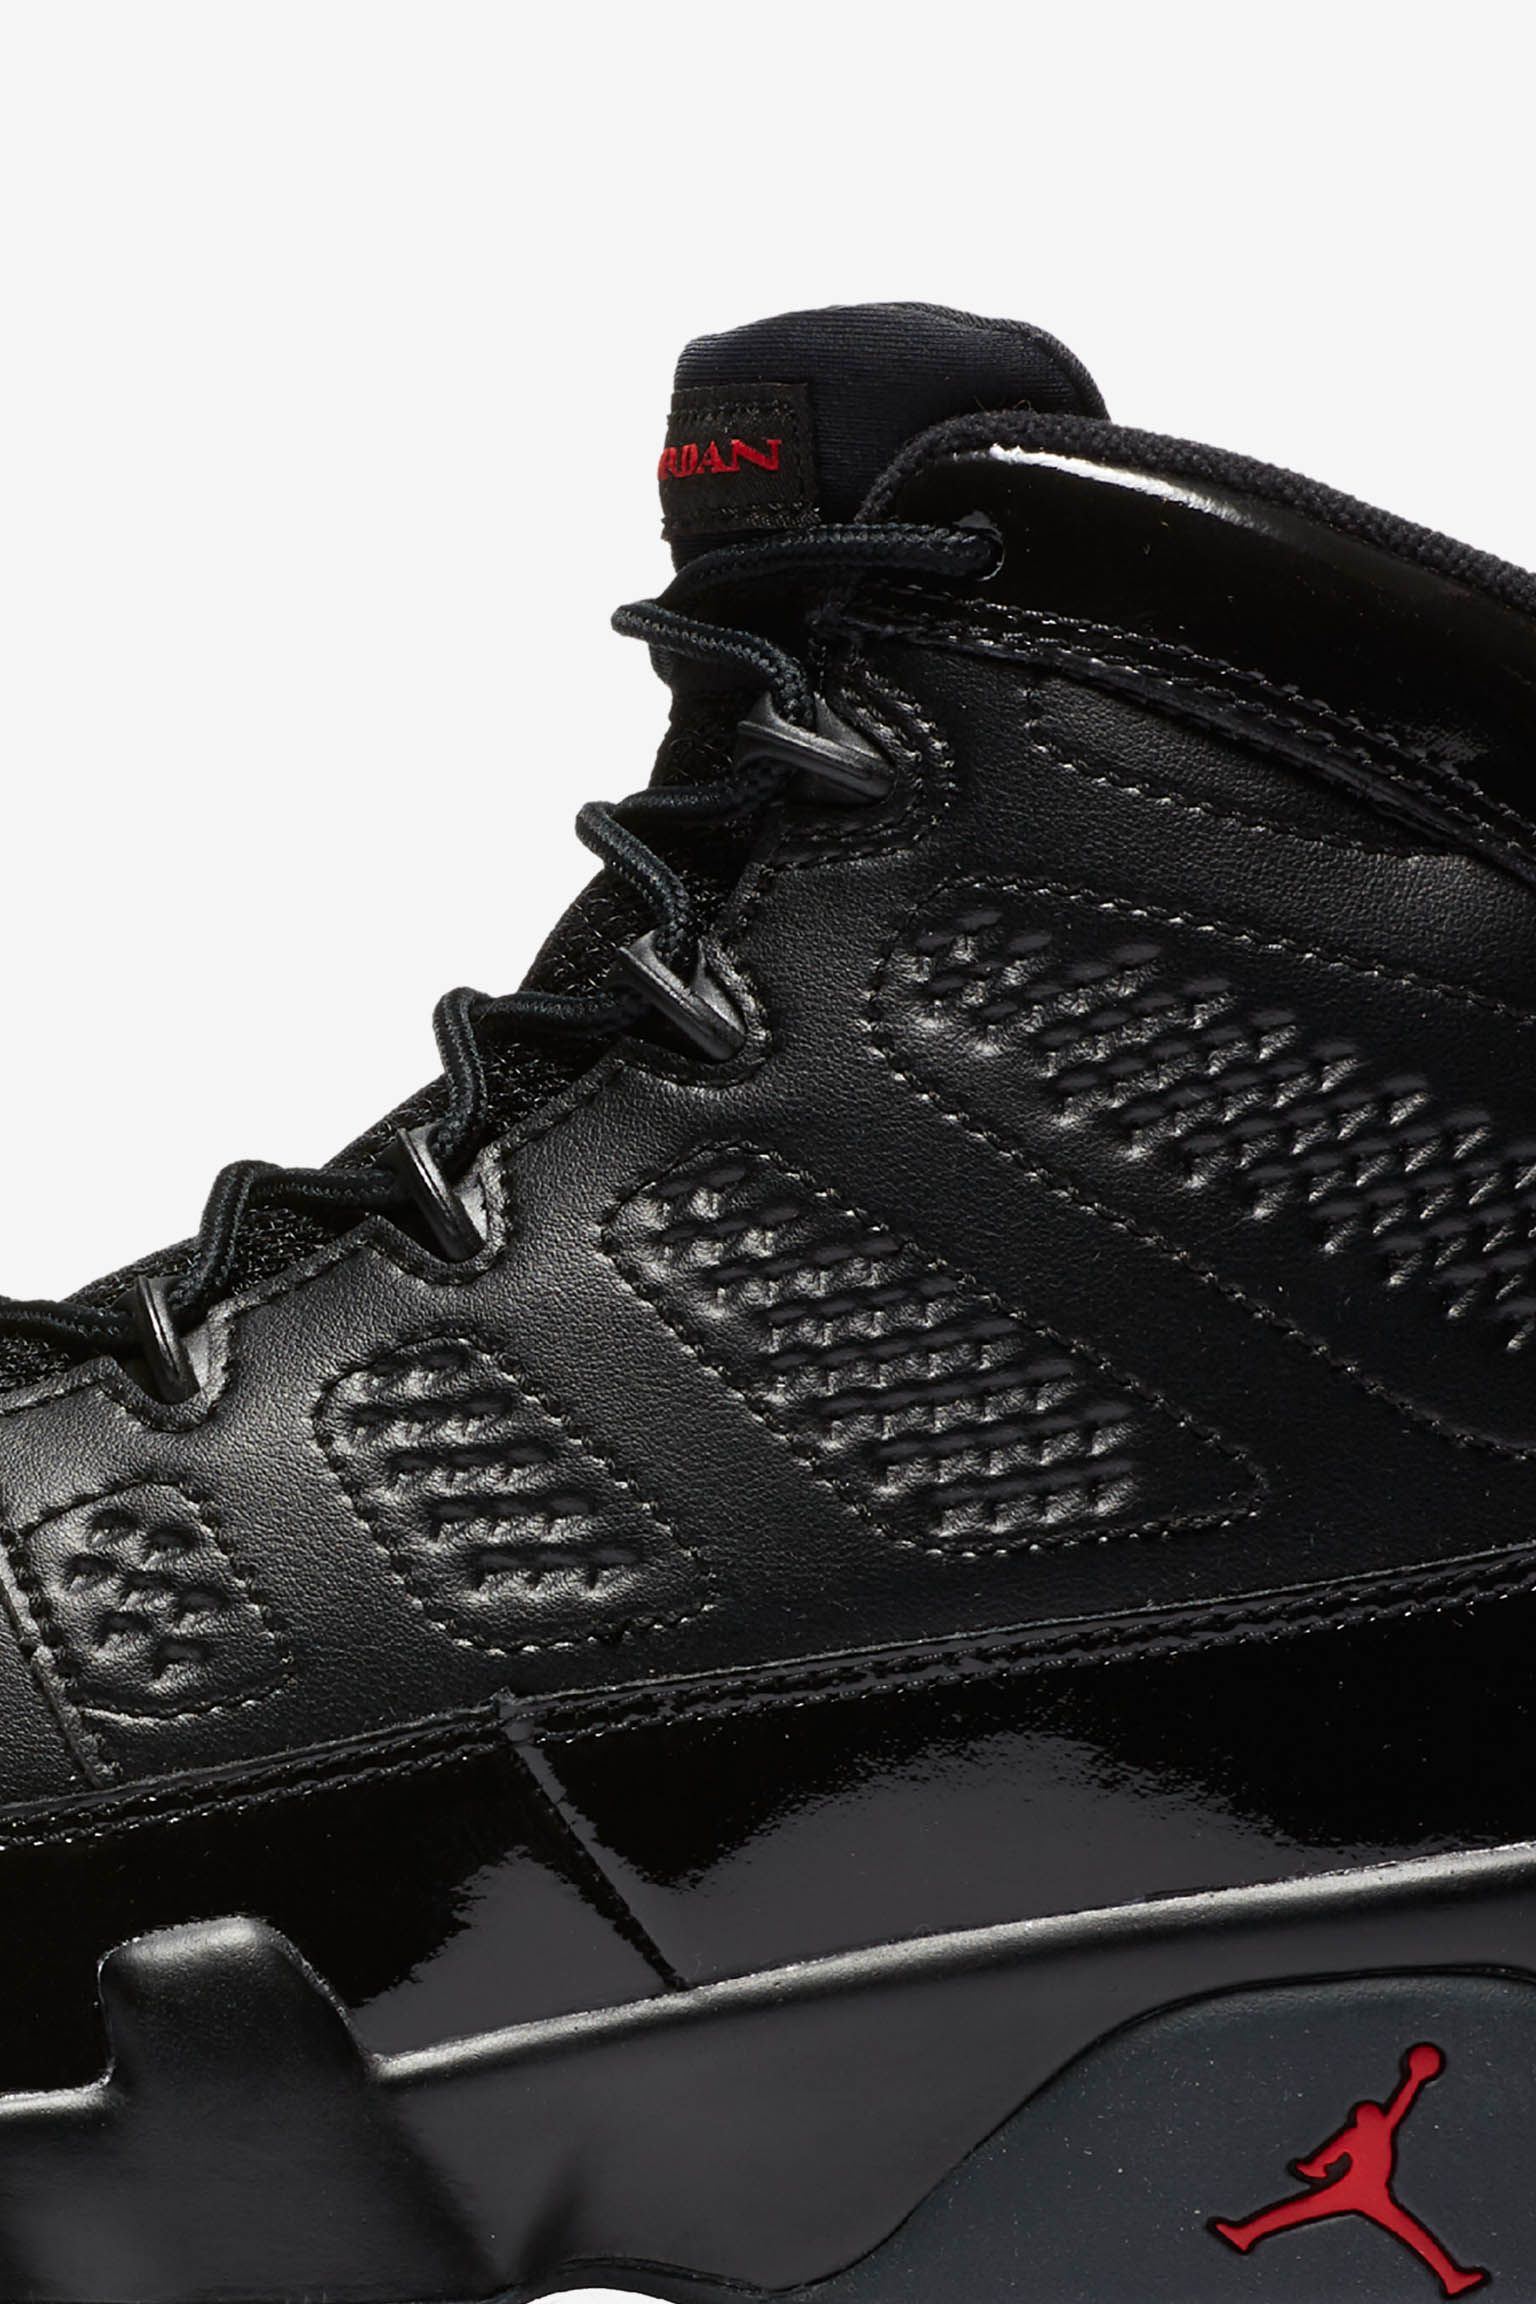 Air Jordan 9 Retro 'Black & University Red' Date. Nike SNKRS